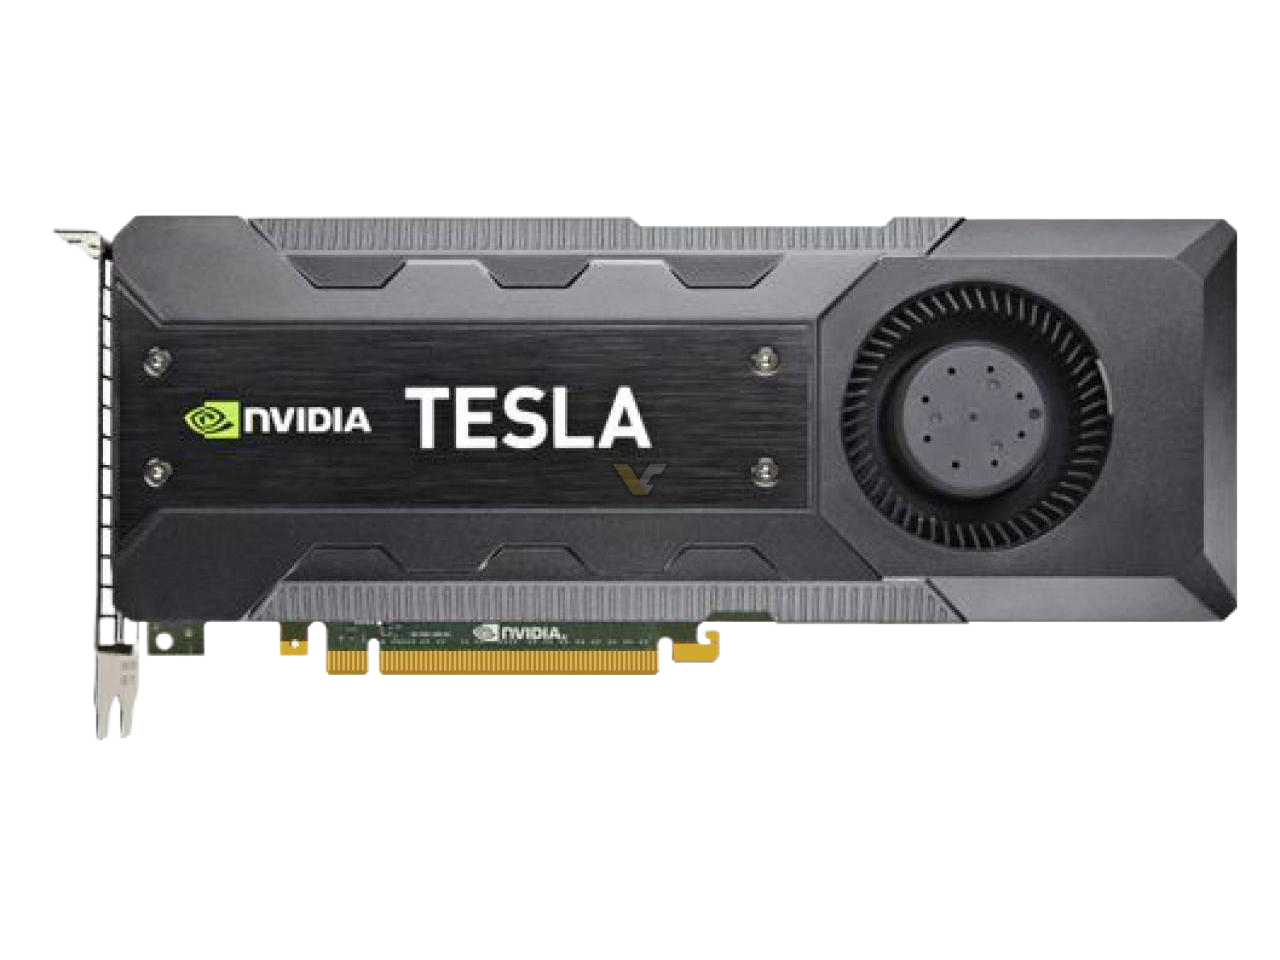 NVIDIA Tesla K20C 5GB GDDR5 PCI Express 2.0 x16 706 MHz Core Video Graphics Card